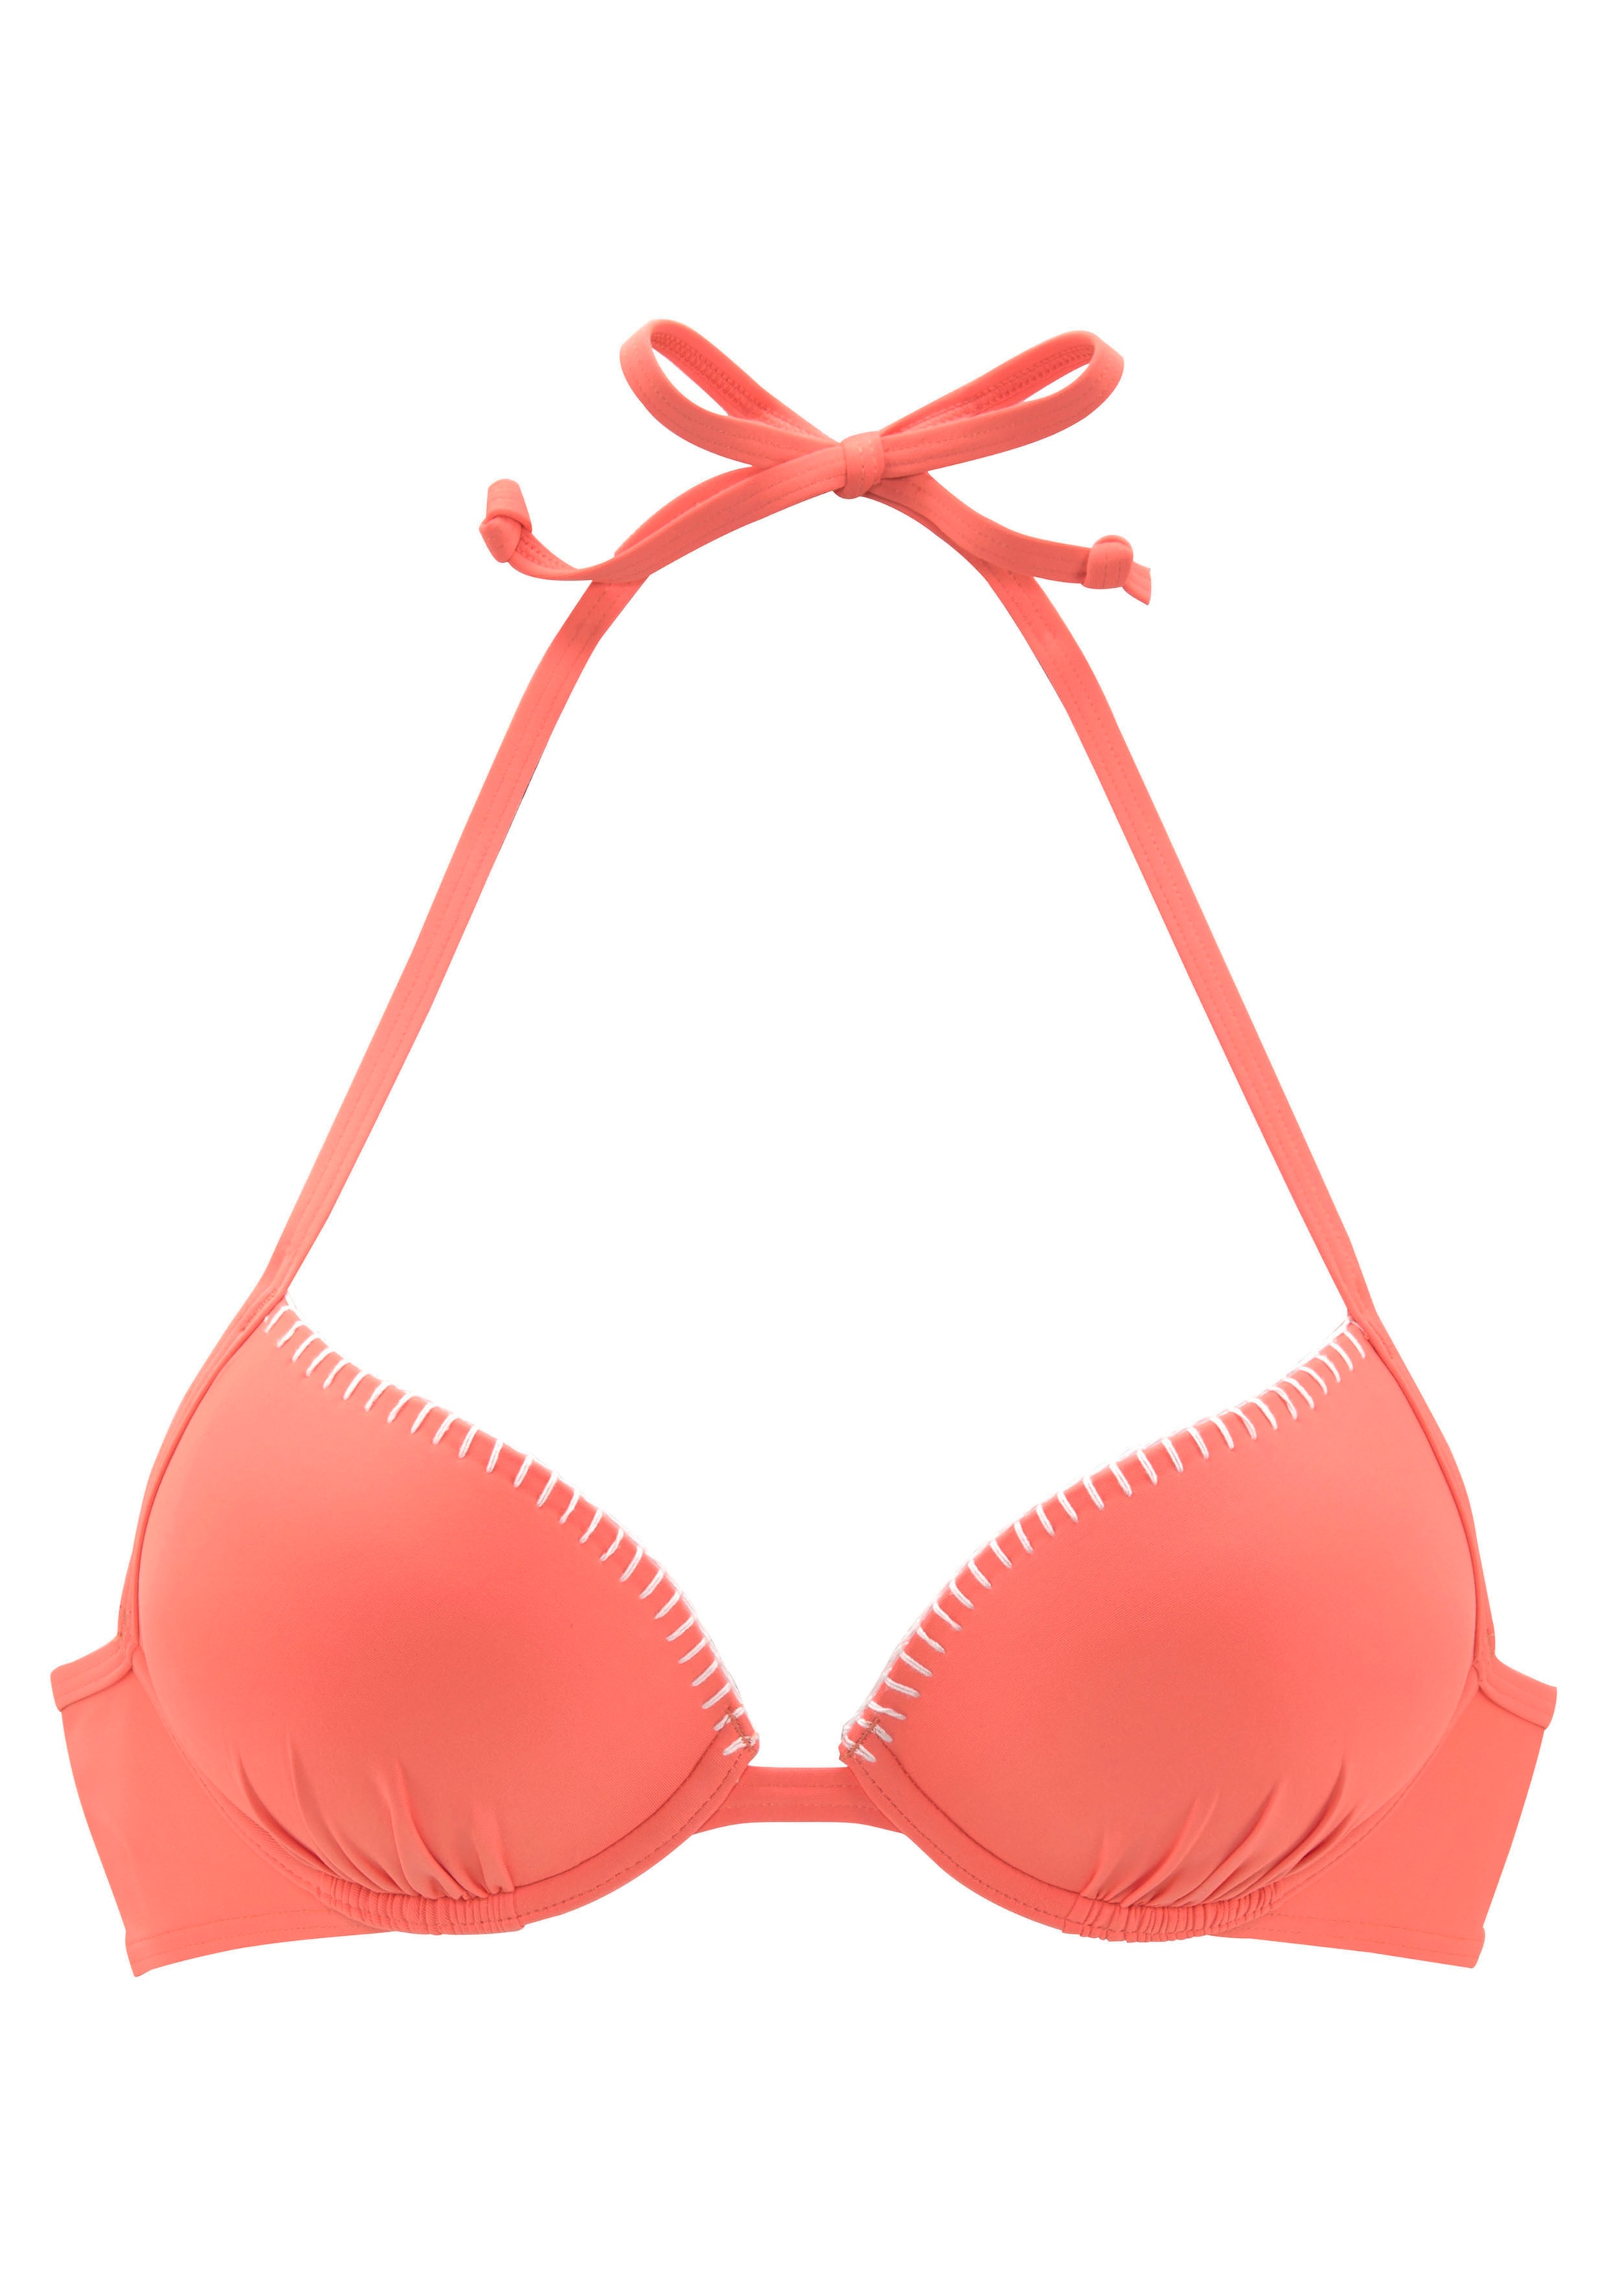 Up Lascana im online Bestelle Push Bikinis Shop